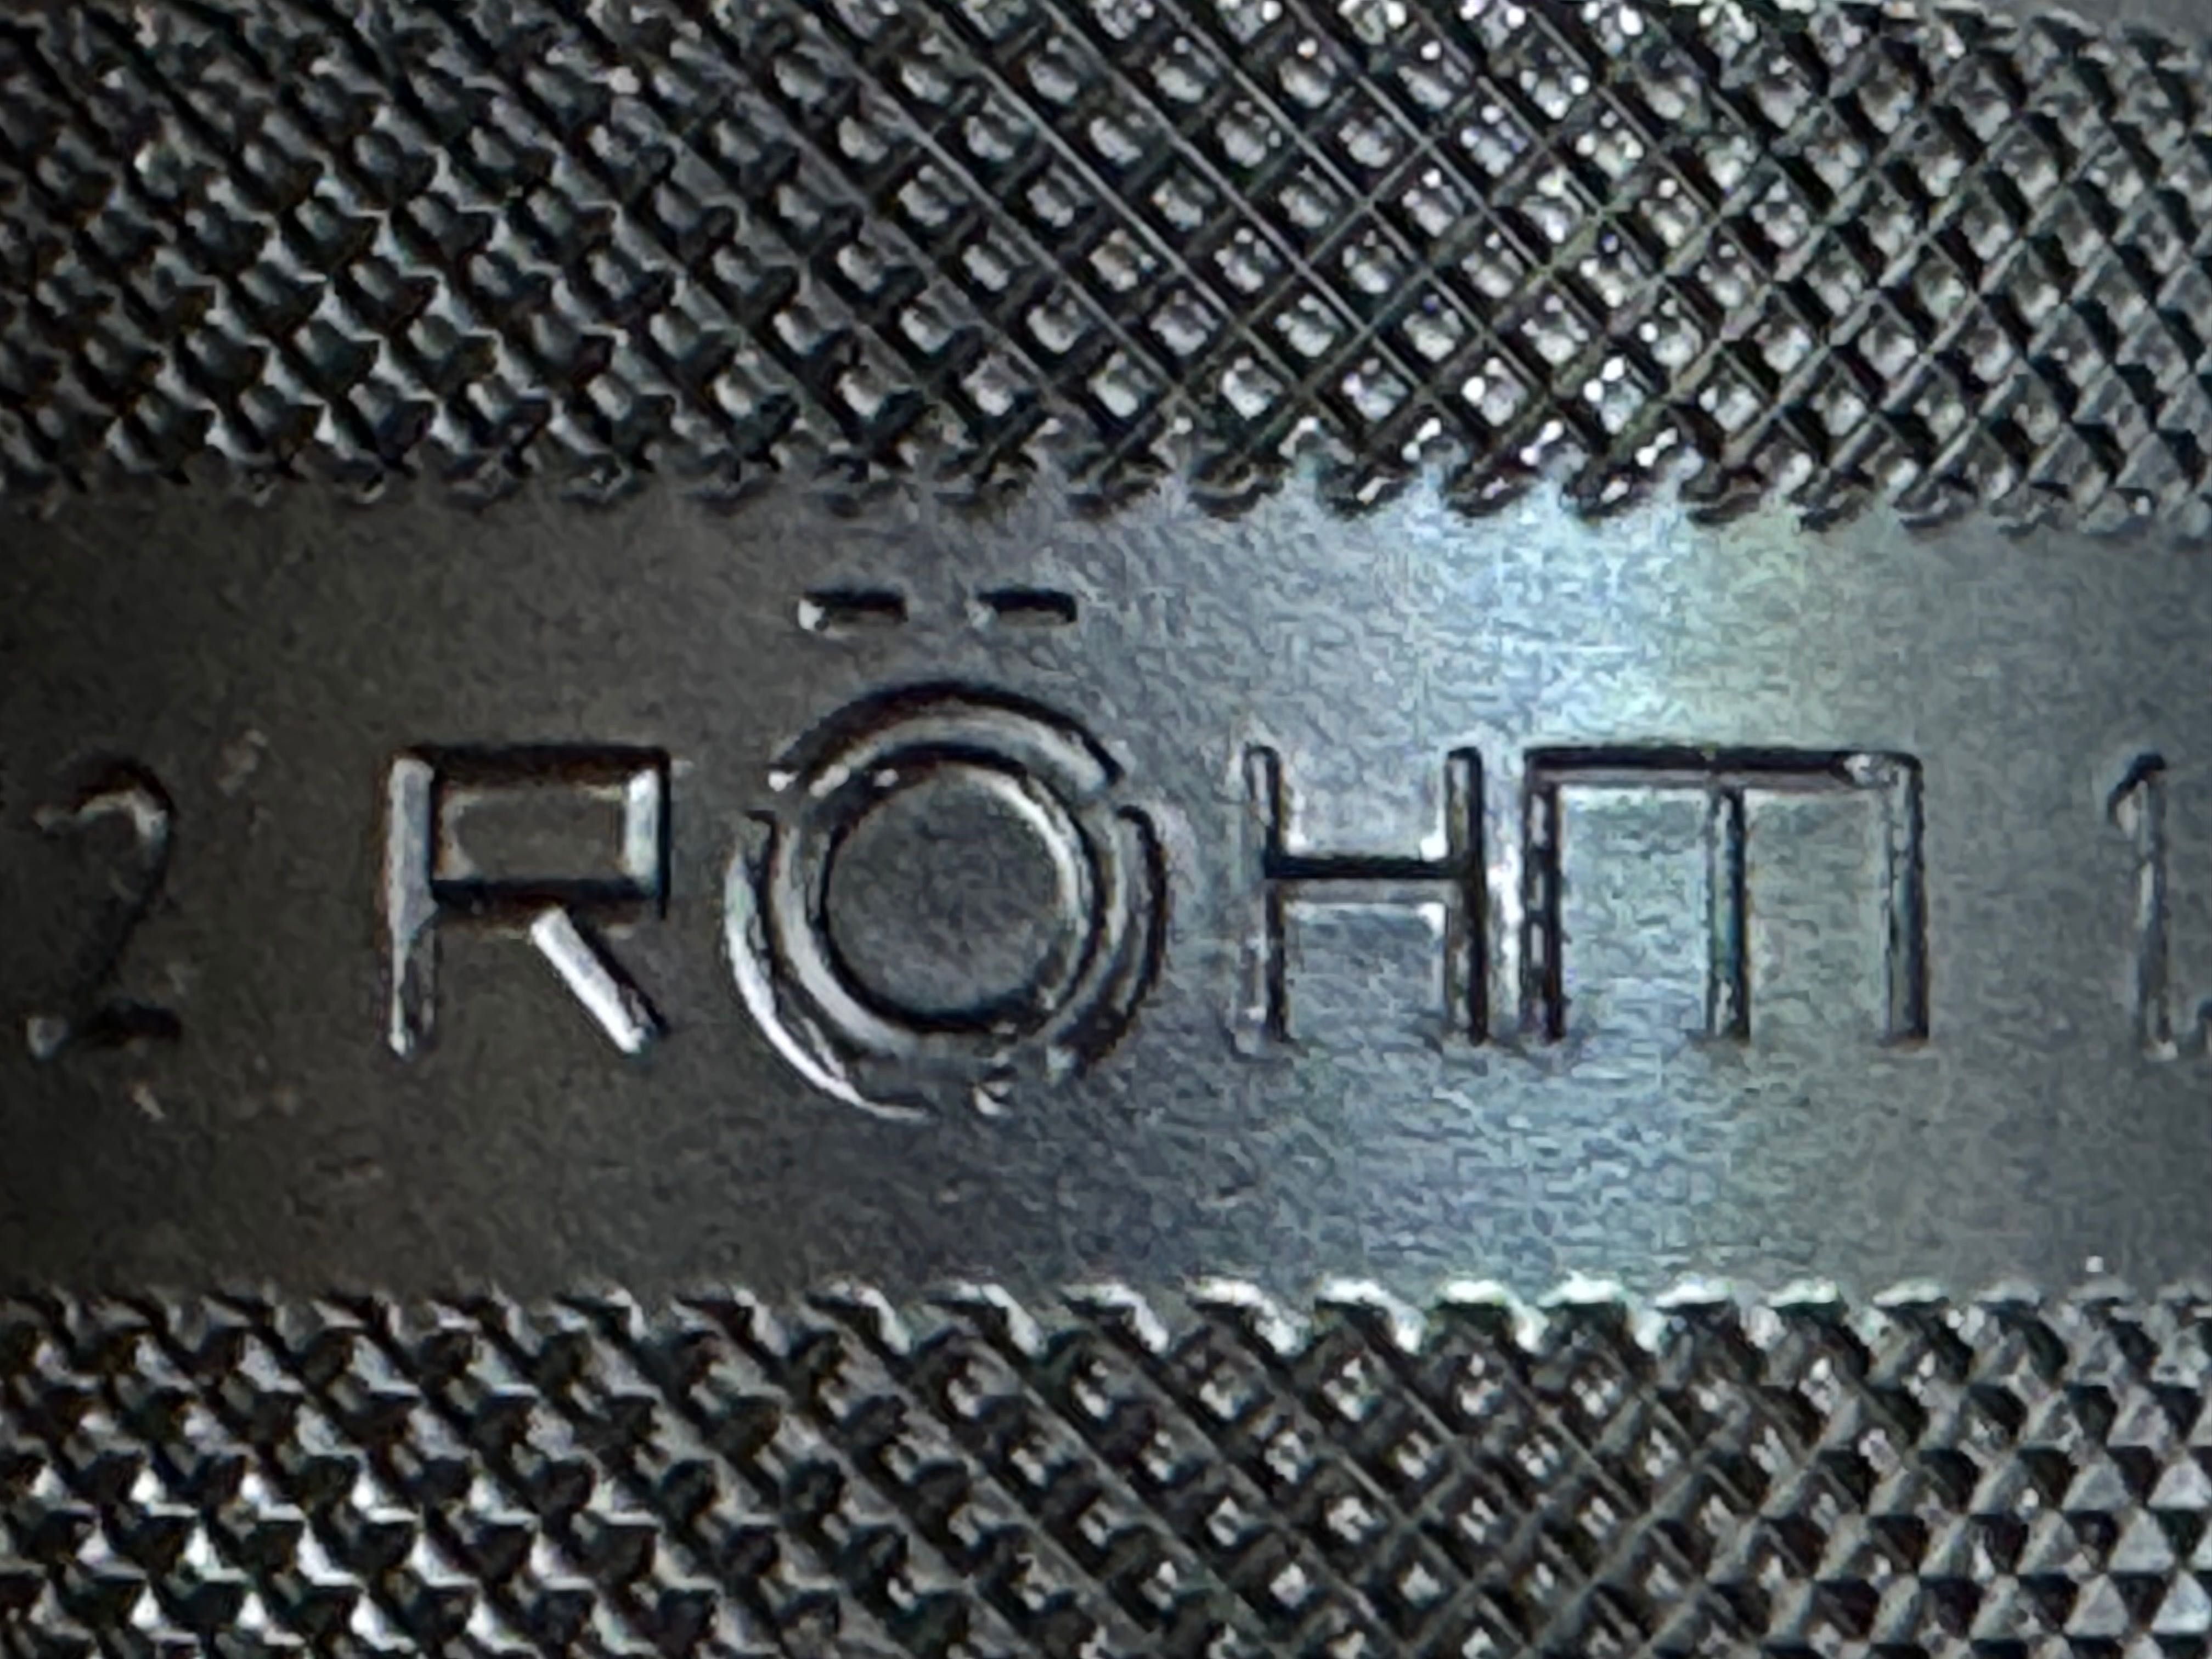 mandrina cheie Bosch (Röhm) 1,5-13mm prindere SDS-plus - ca noua